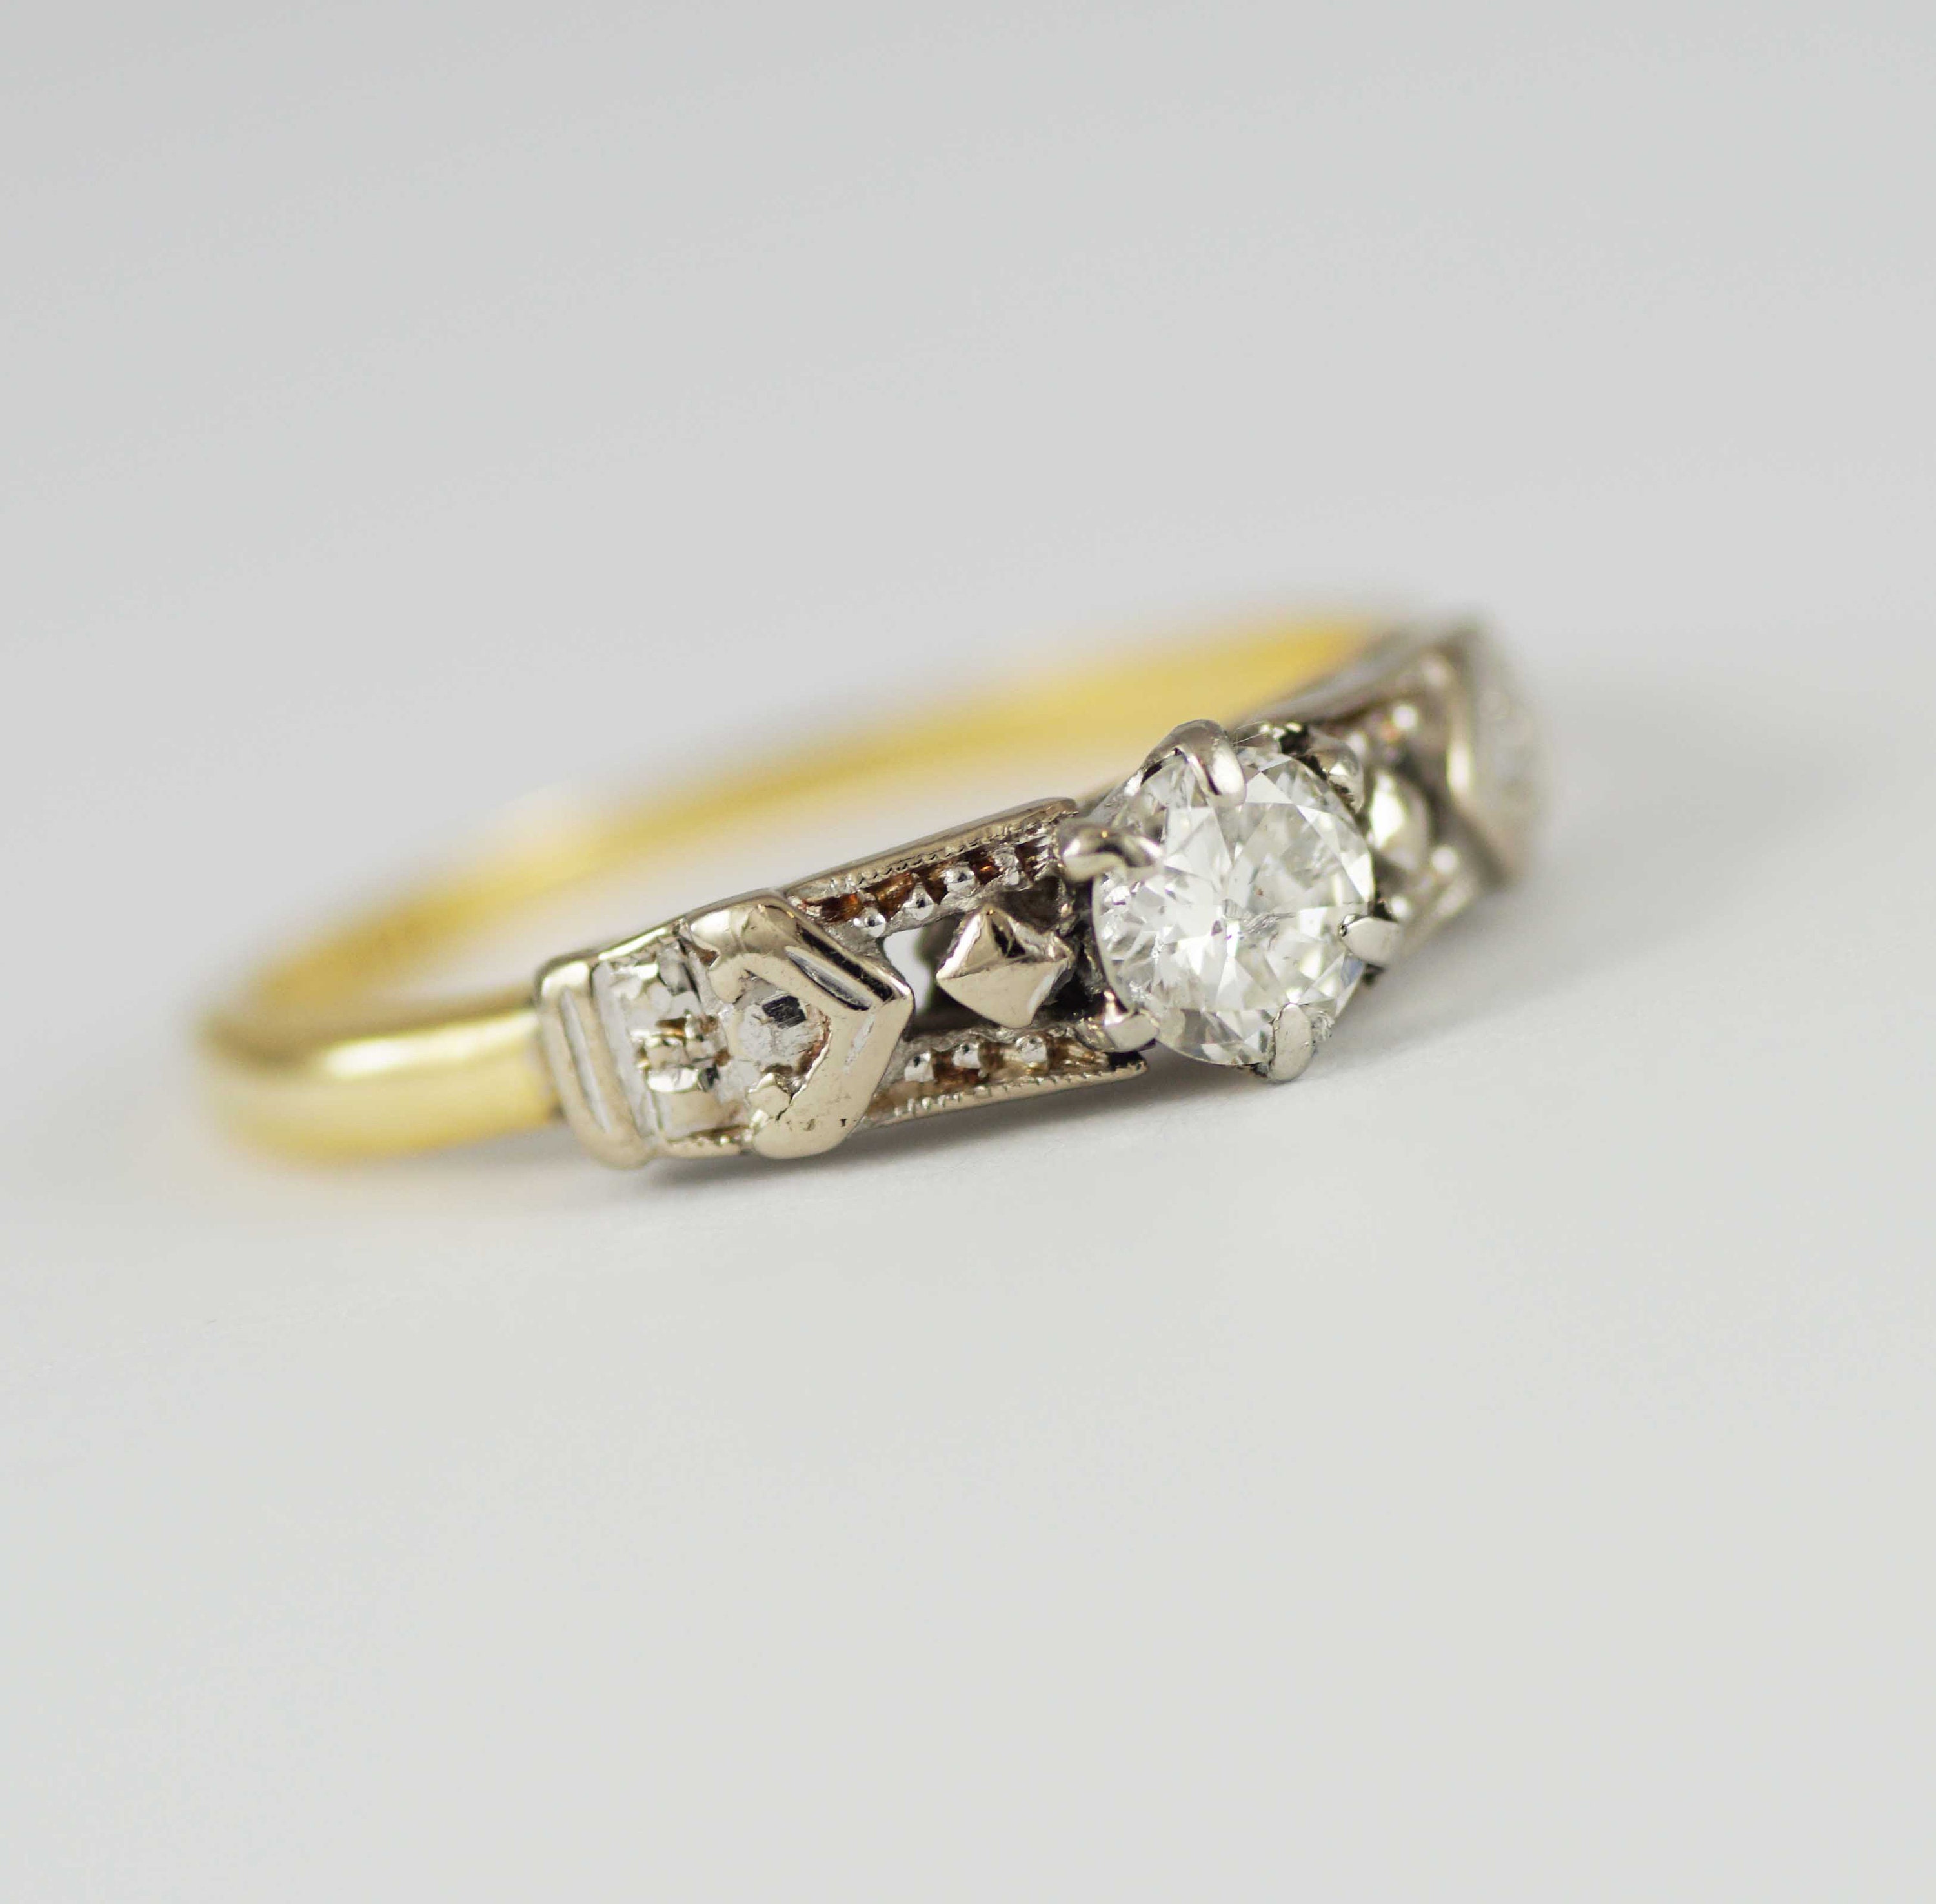 Antique Diamond Ring 18ct Gold and Platinum | Etsy